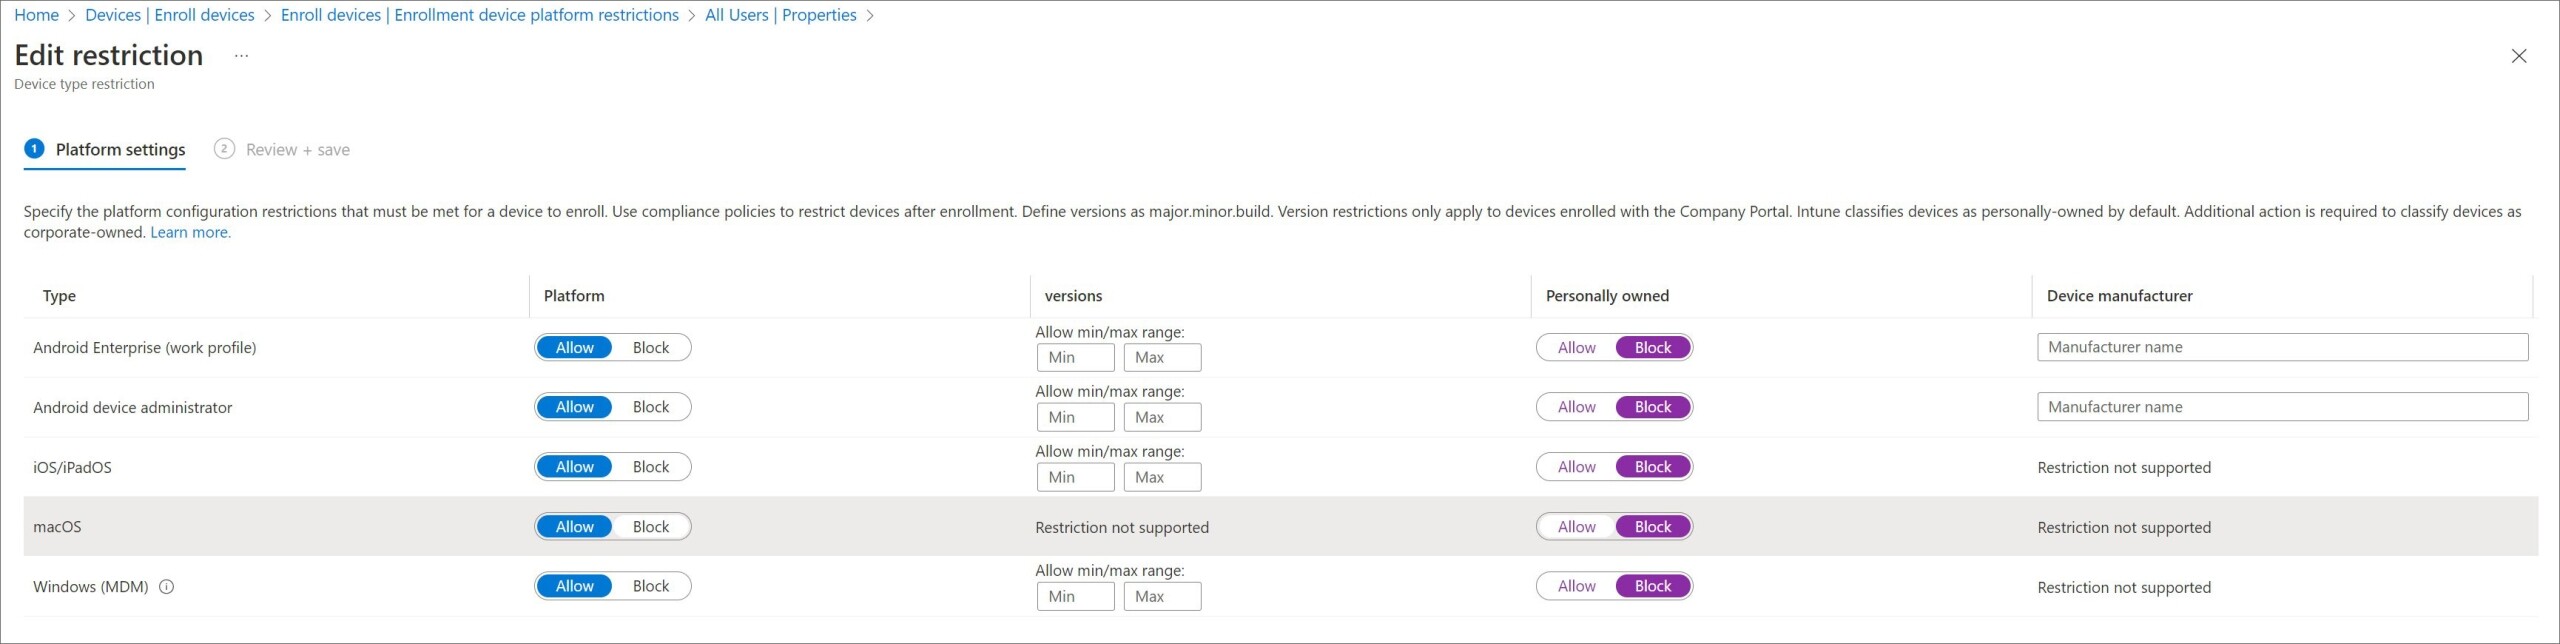 Geräteverwaltung mit dem Microsoft Endpoint Manager: Enrollment Restrictions